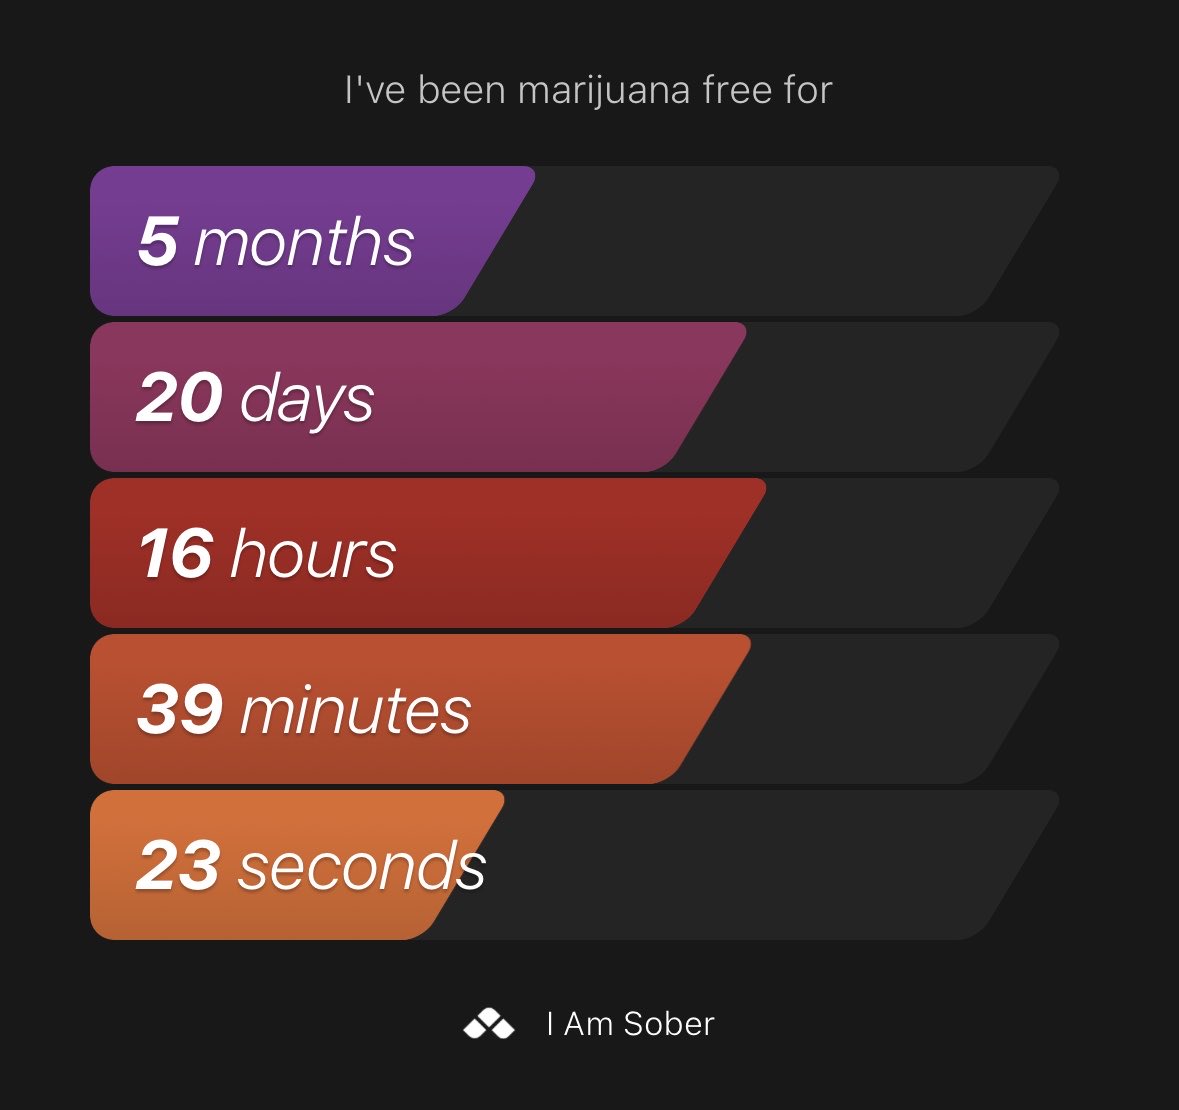 I've been marijuana free for 5 months, 20 days #iamsober